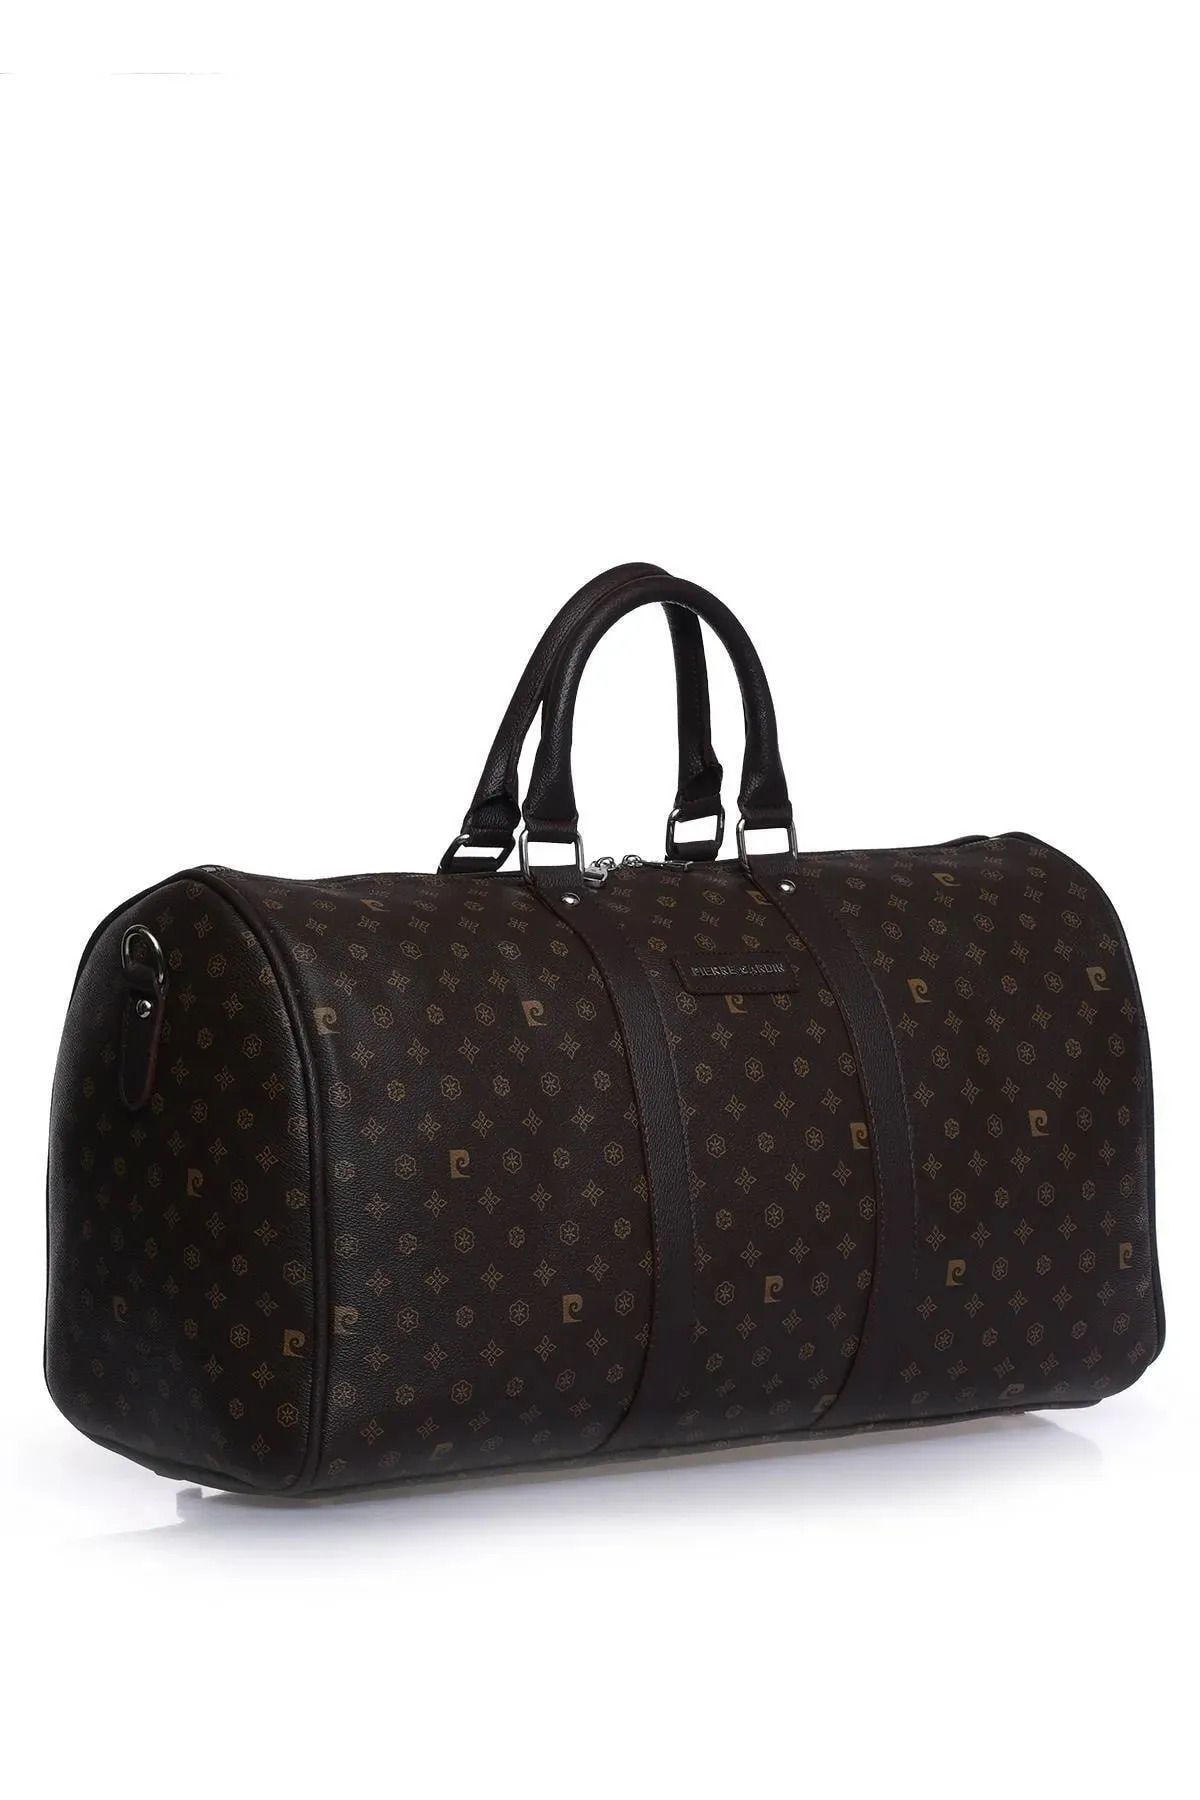 Pierre Cardin چمدان دستی و کیسه ورزشی قهوه ای یونیسکس